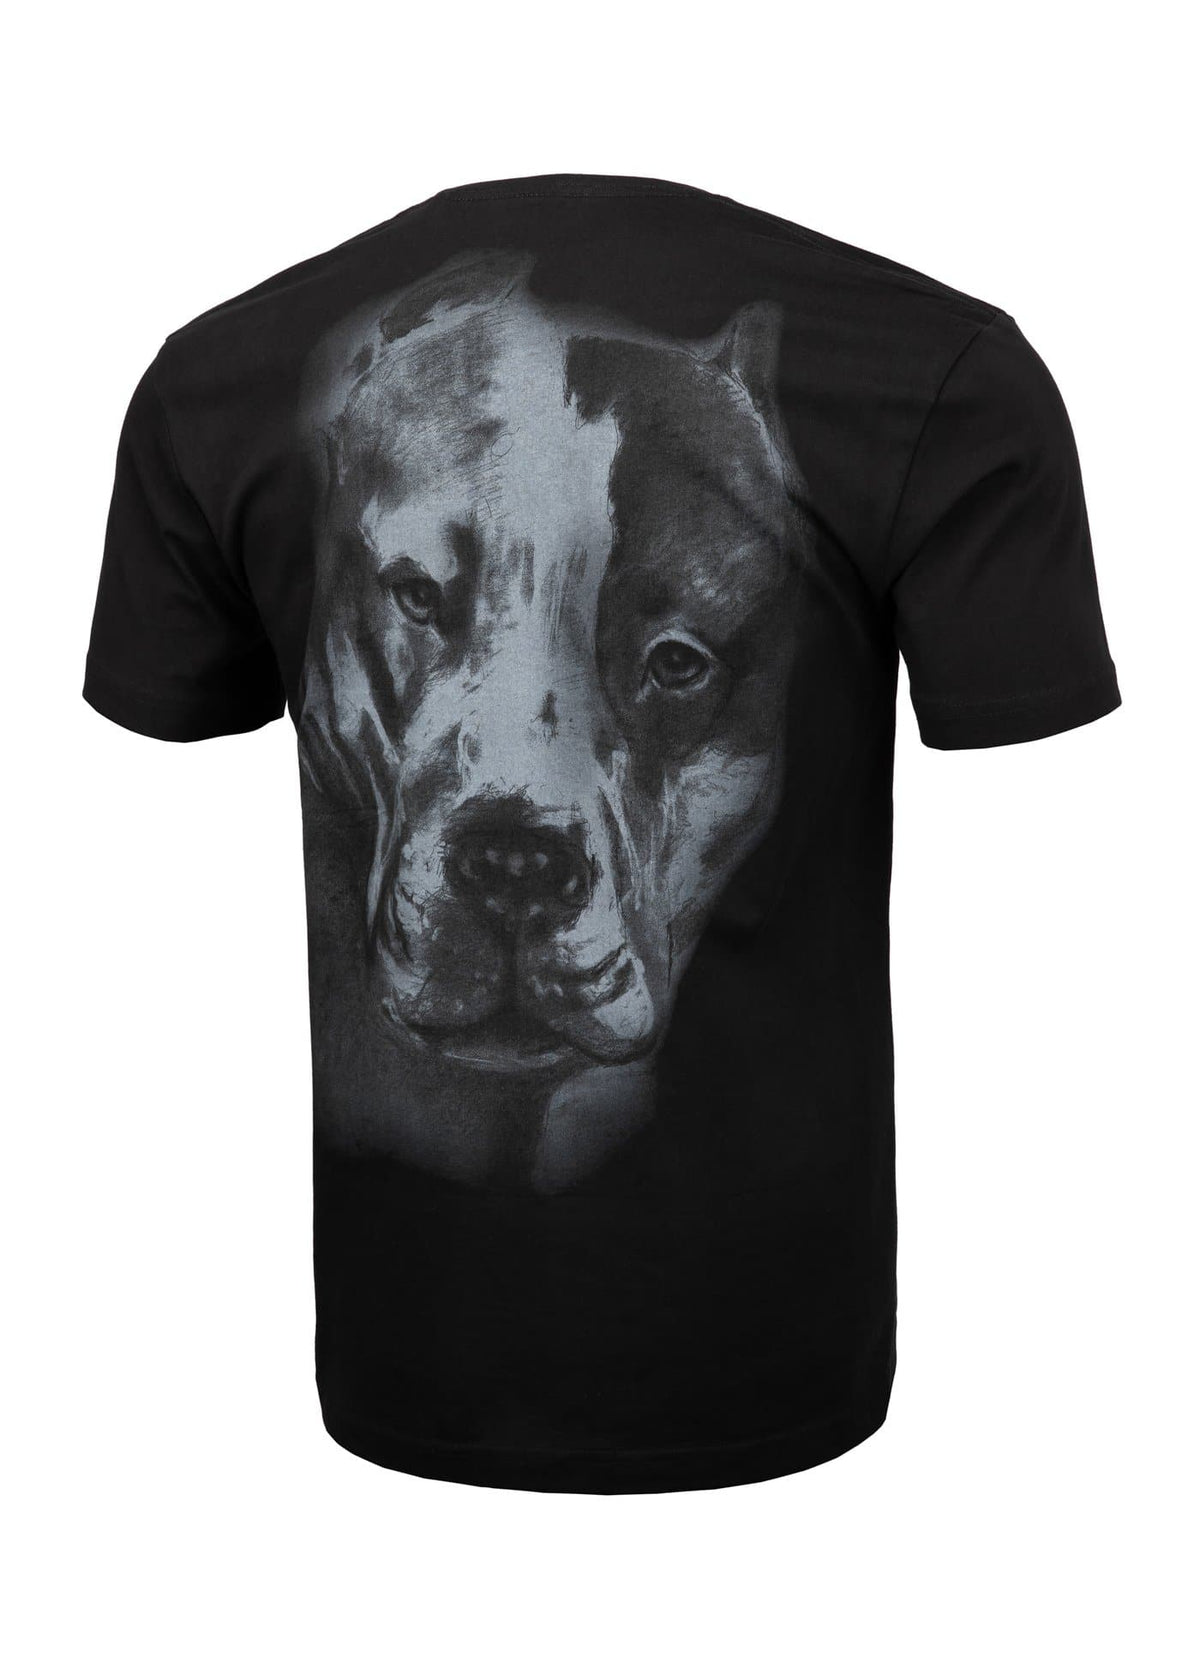 T-shirt SAN DIEGO II Black - pitbullwestcoast